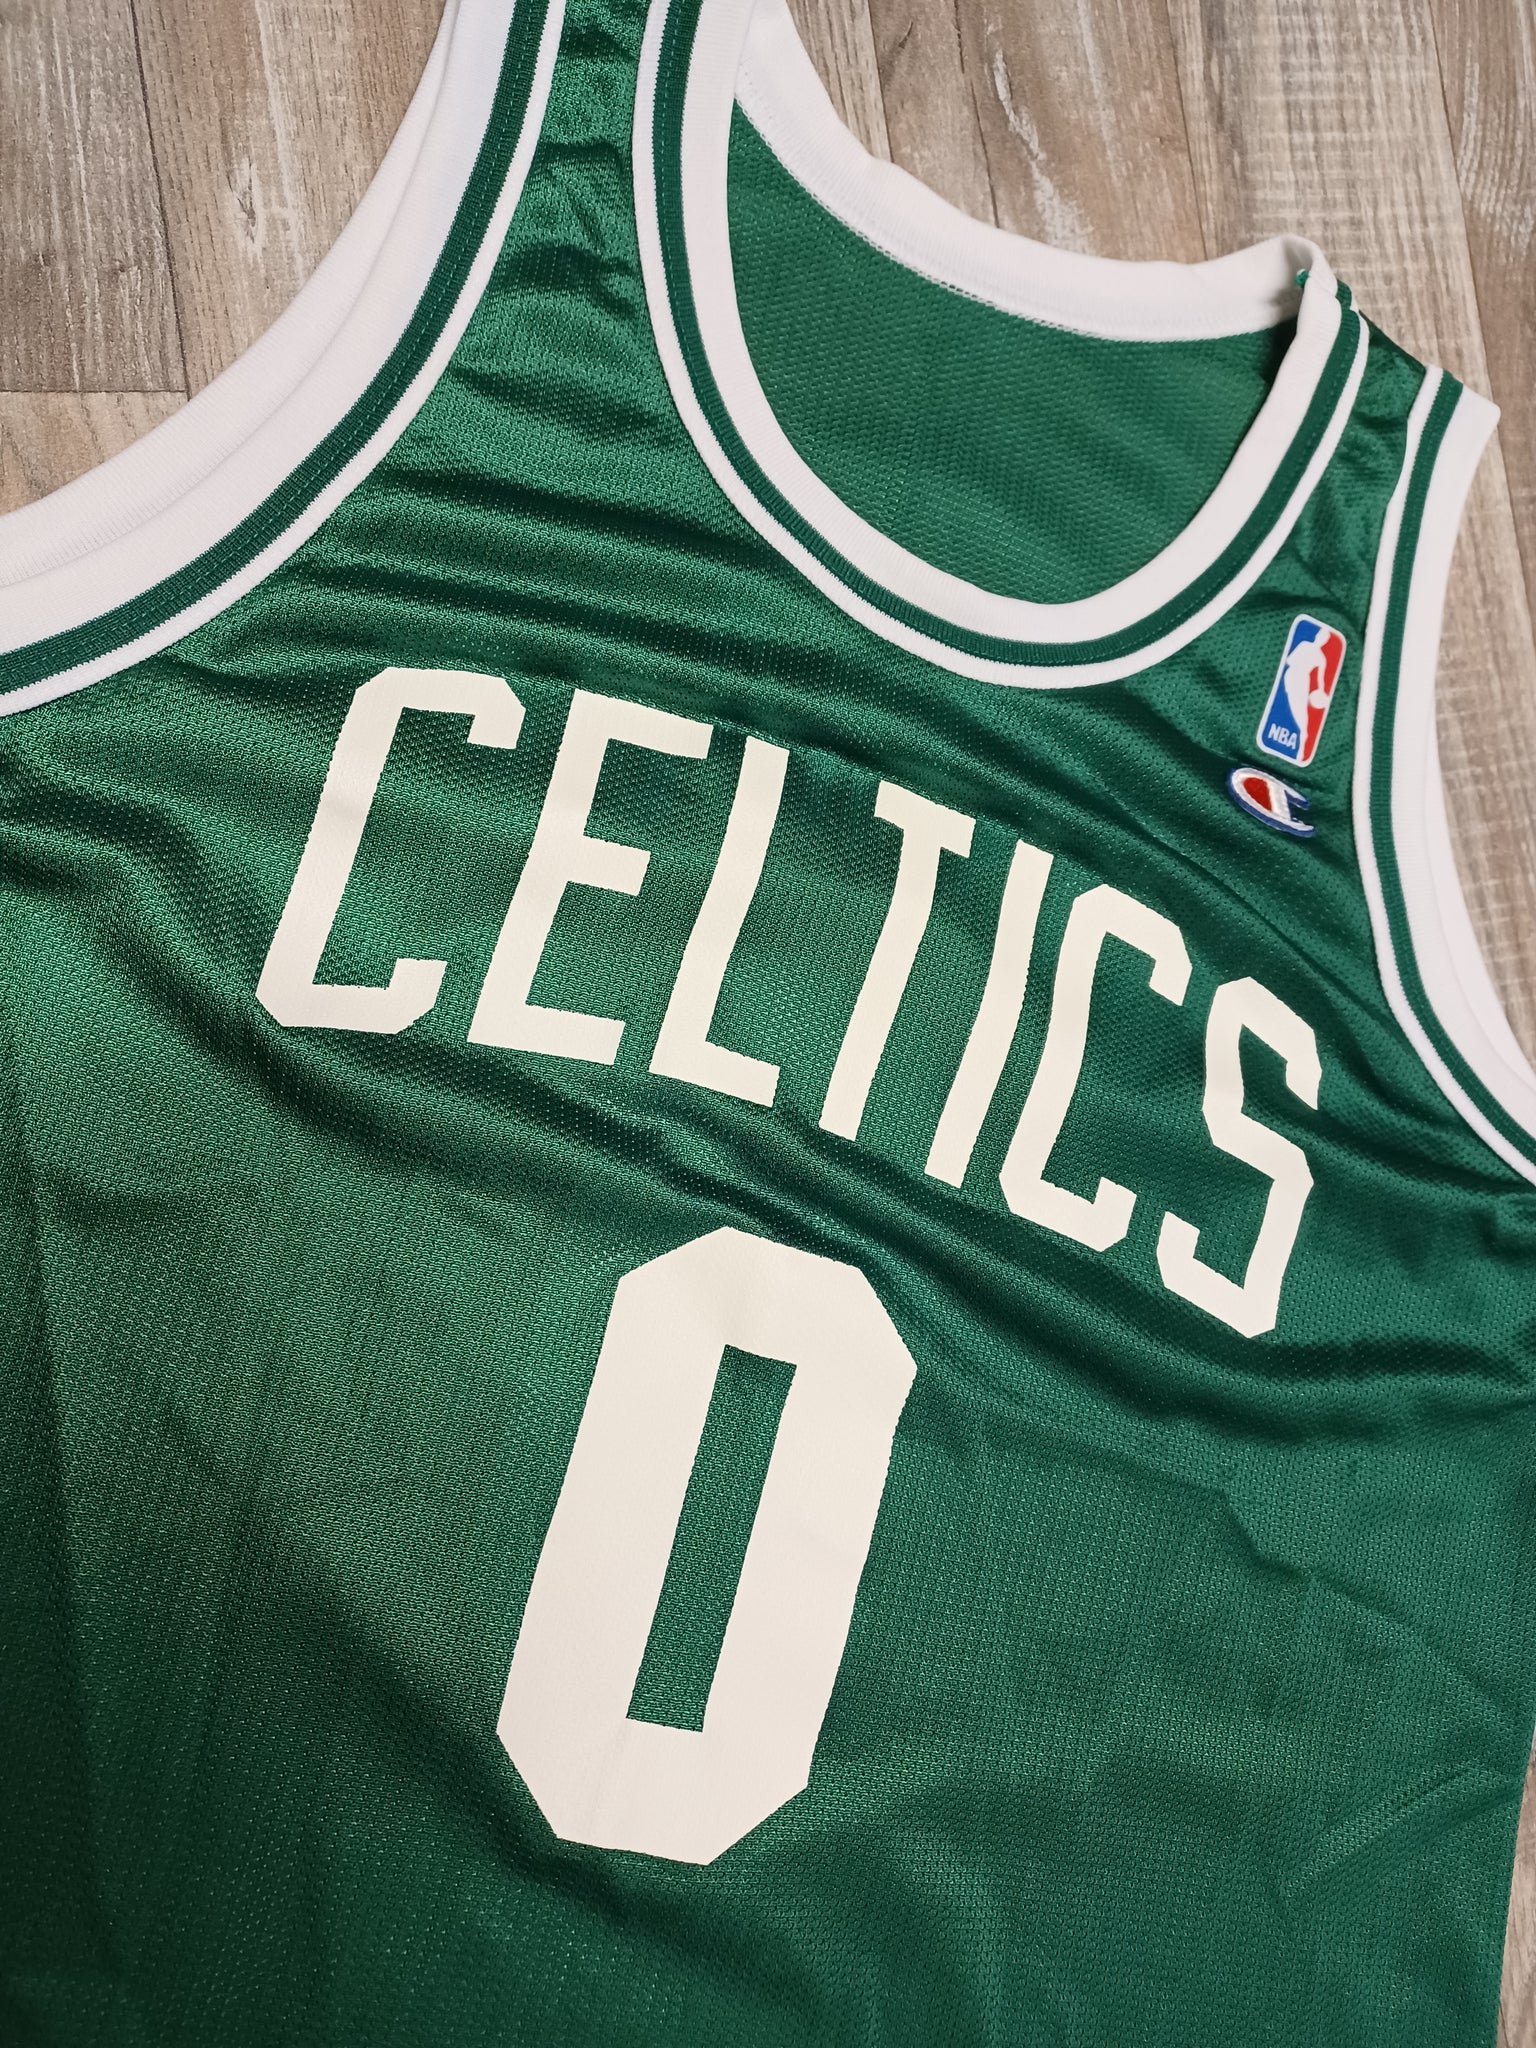 🏀 Eric Montross Boston Celtics Jersey Size Large – The Throwback Store 🏀